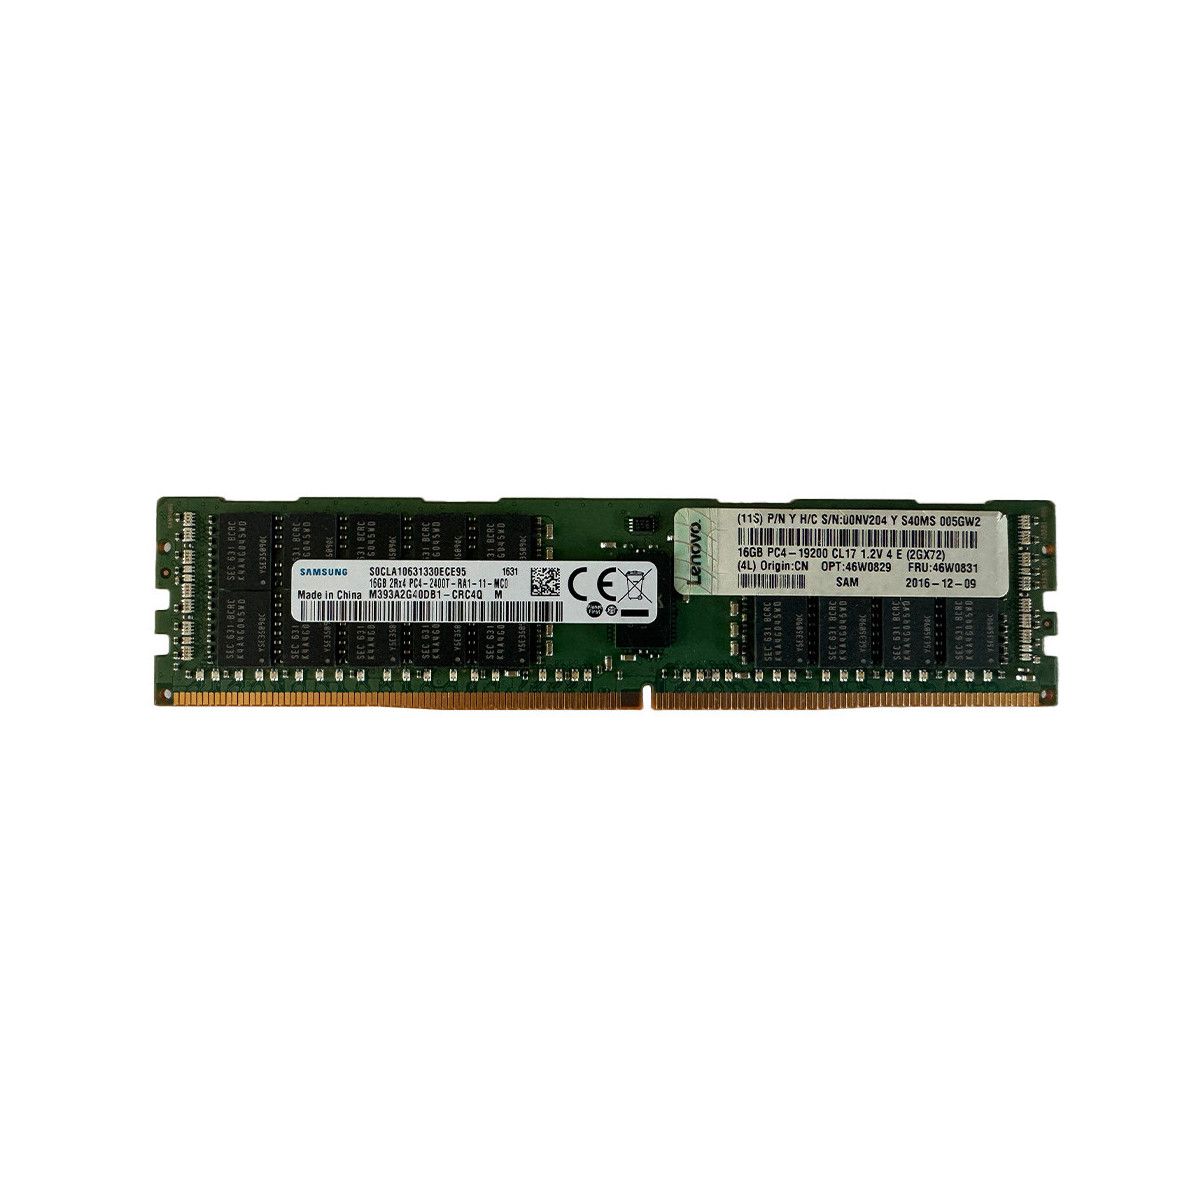 A8797578-MS - Memstar 1x 16GB DDR4-2400 RDIMM PC4-19200T-R - Memorie OEM compatibilă Mem-Star 1 - Memstar 